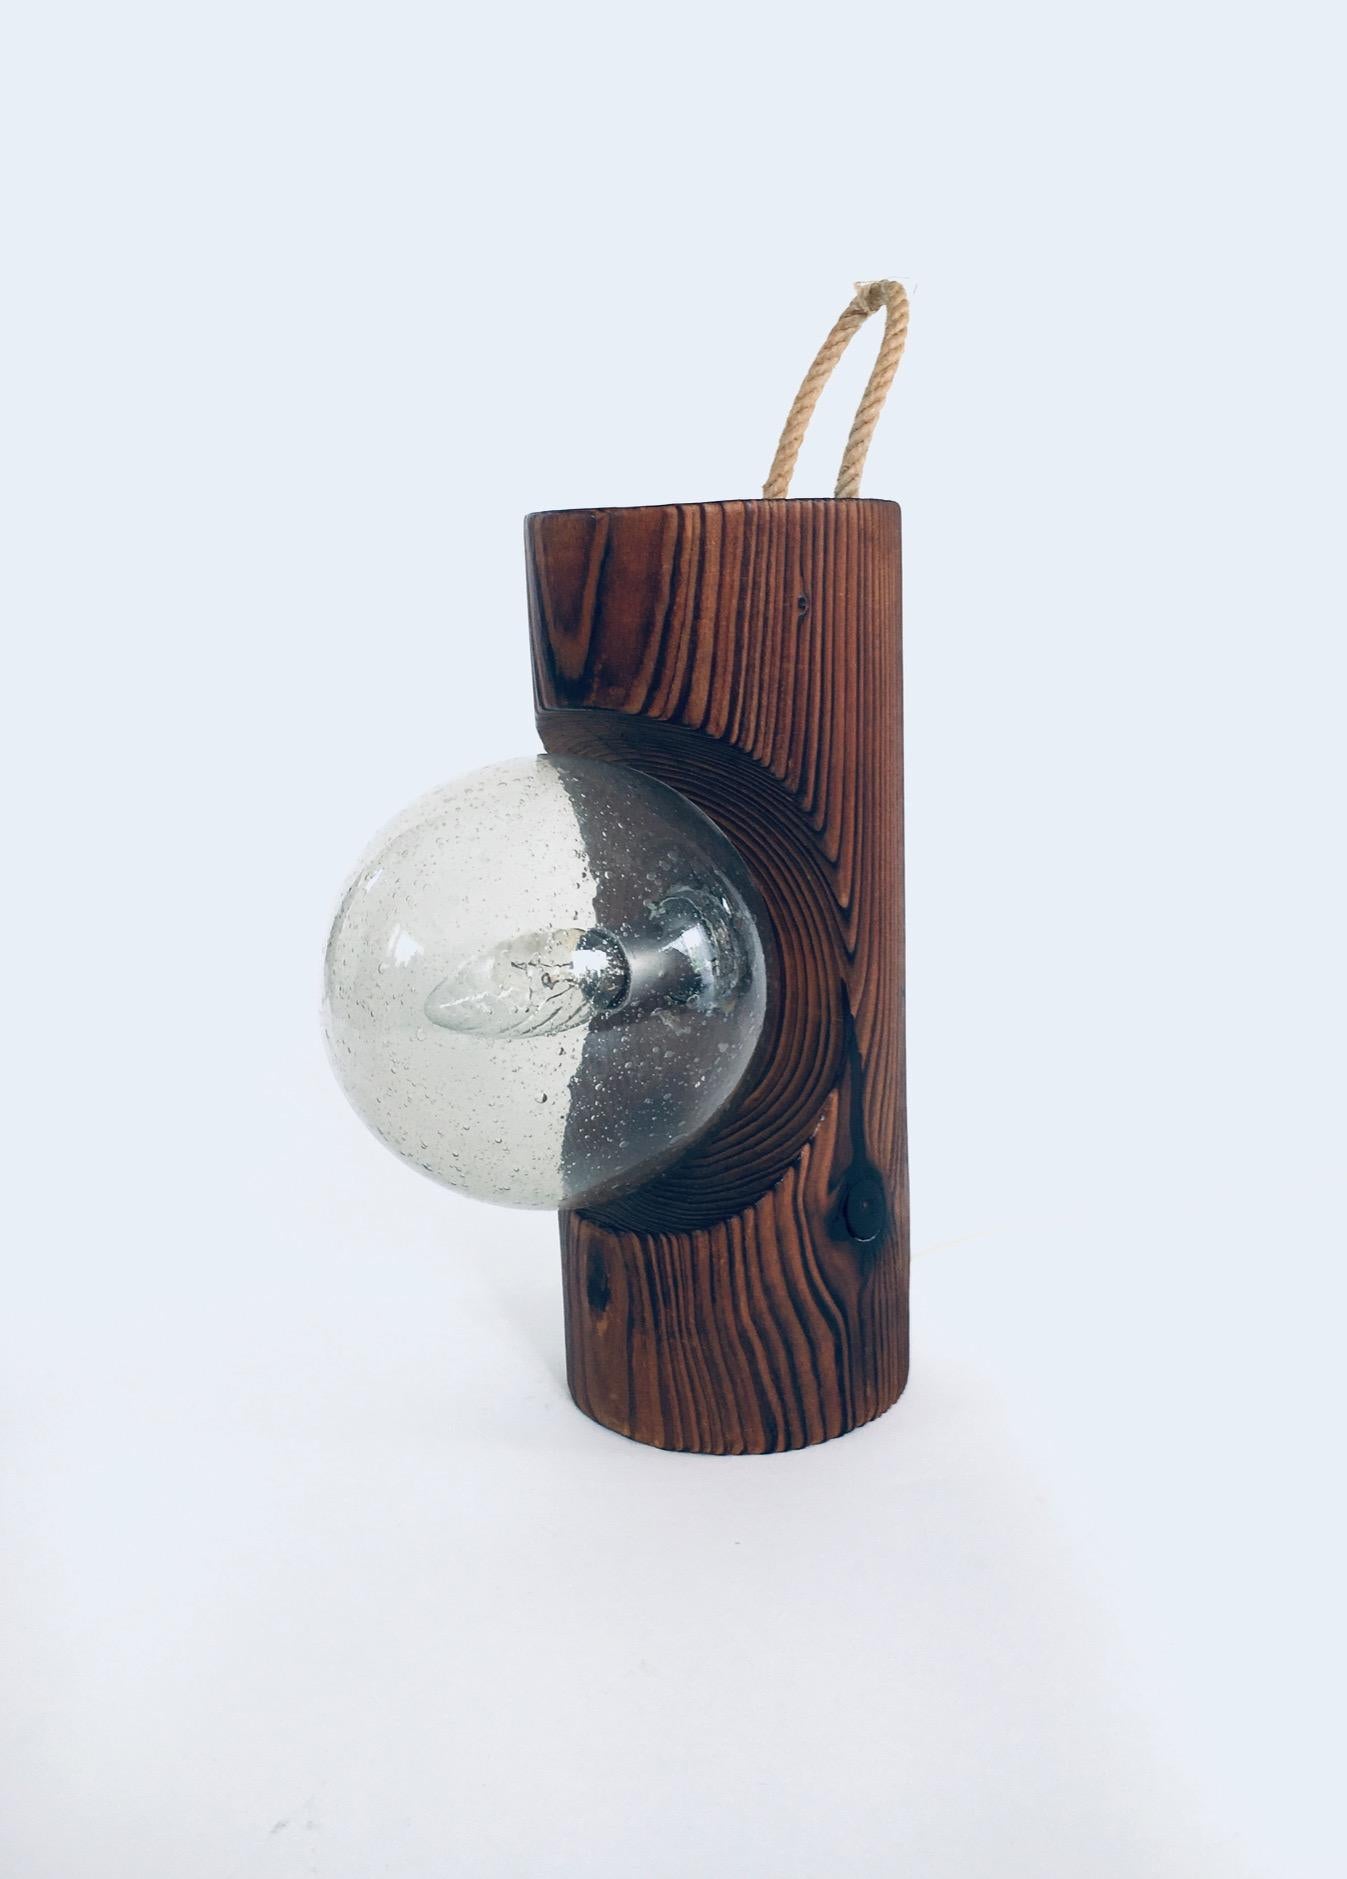 Brutalist Design Wood Table or Wall Lamp by Temde Leuchten, Switzerland 1960's For Sale 1